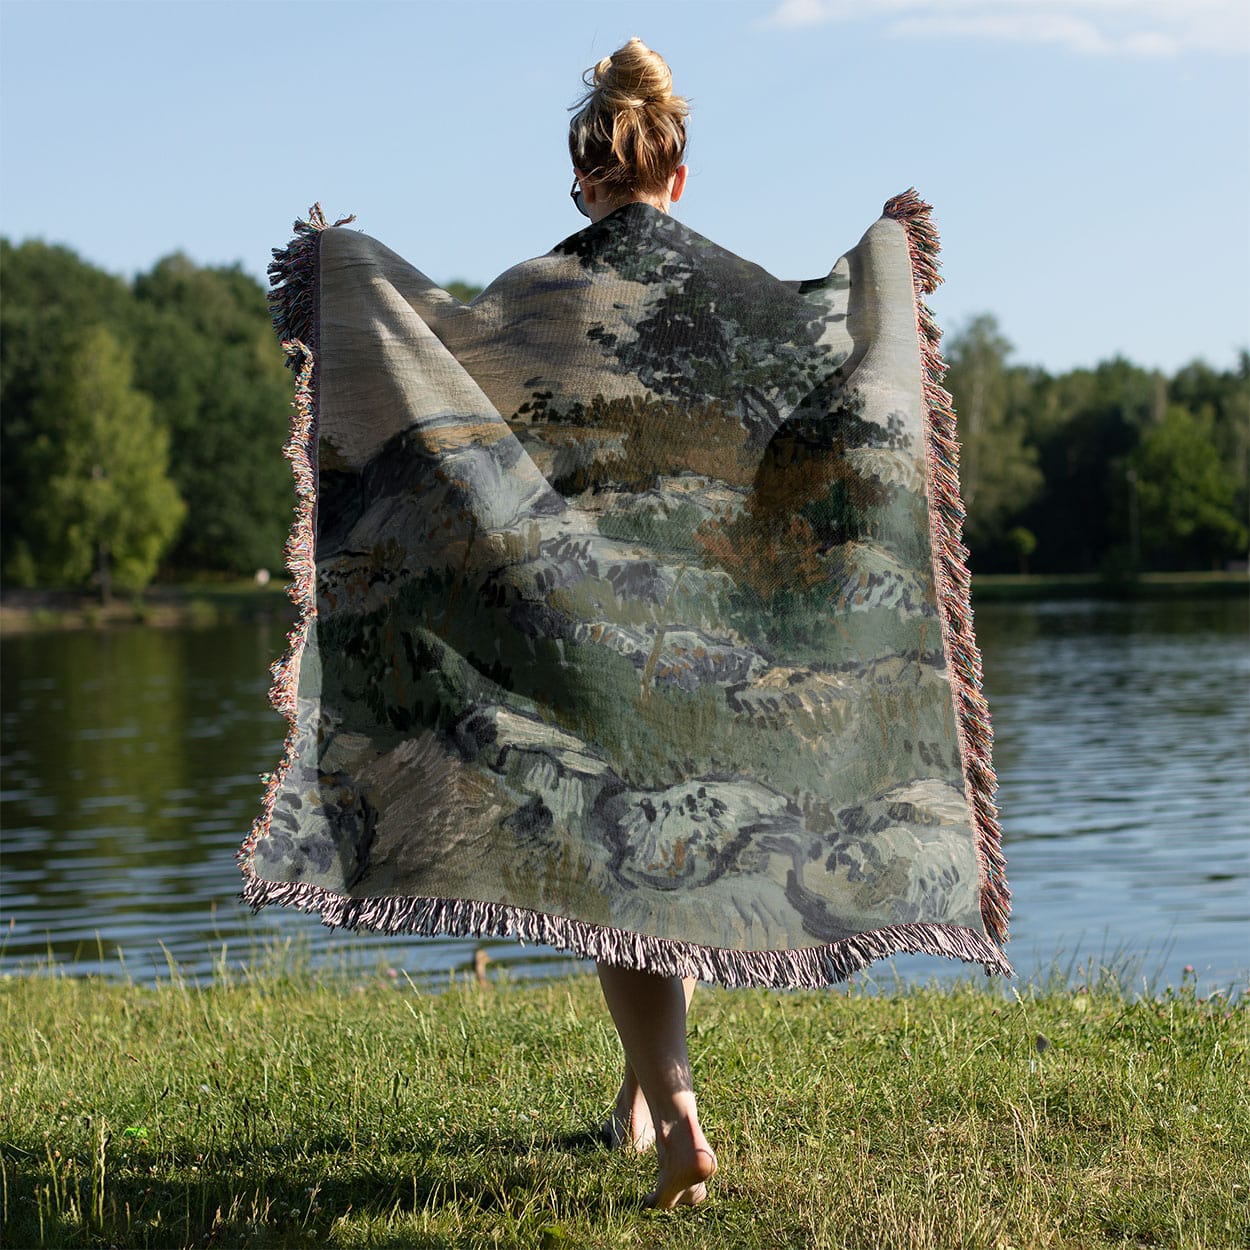 Green Aesthetic Landscape Woven Blanket Held on a Woman's Back Outside